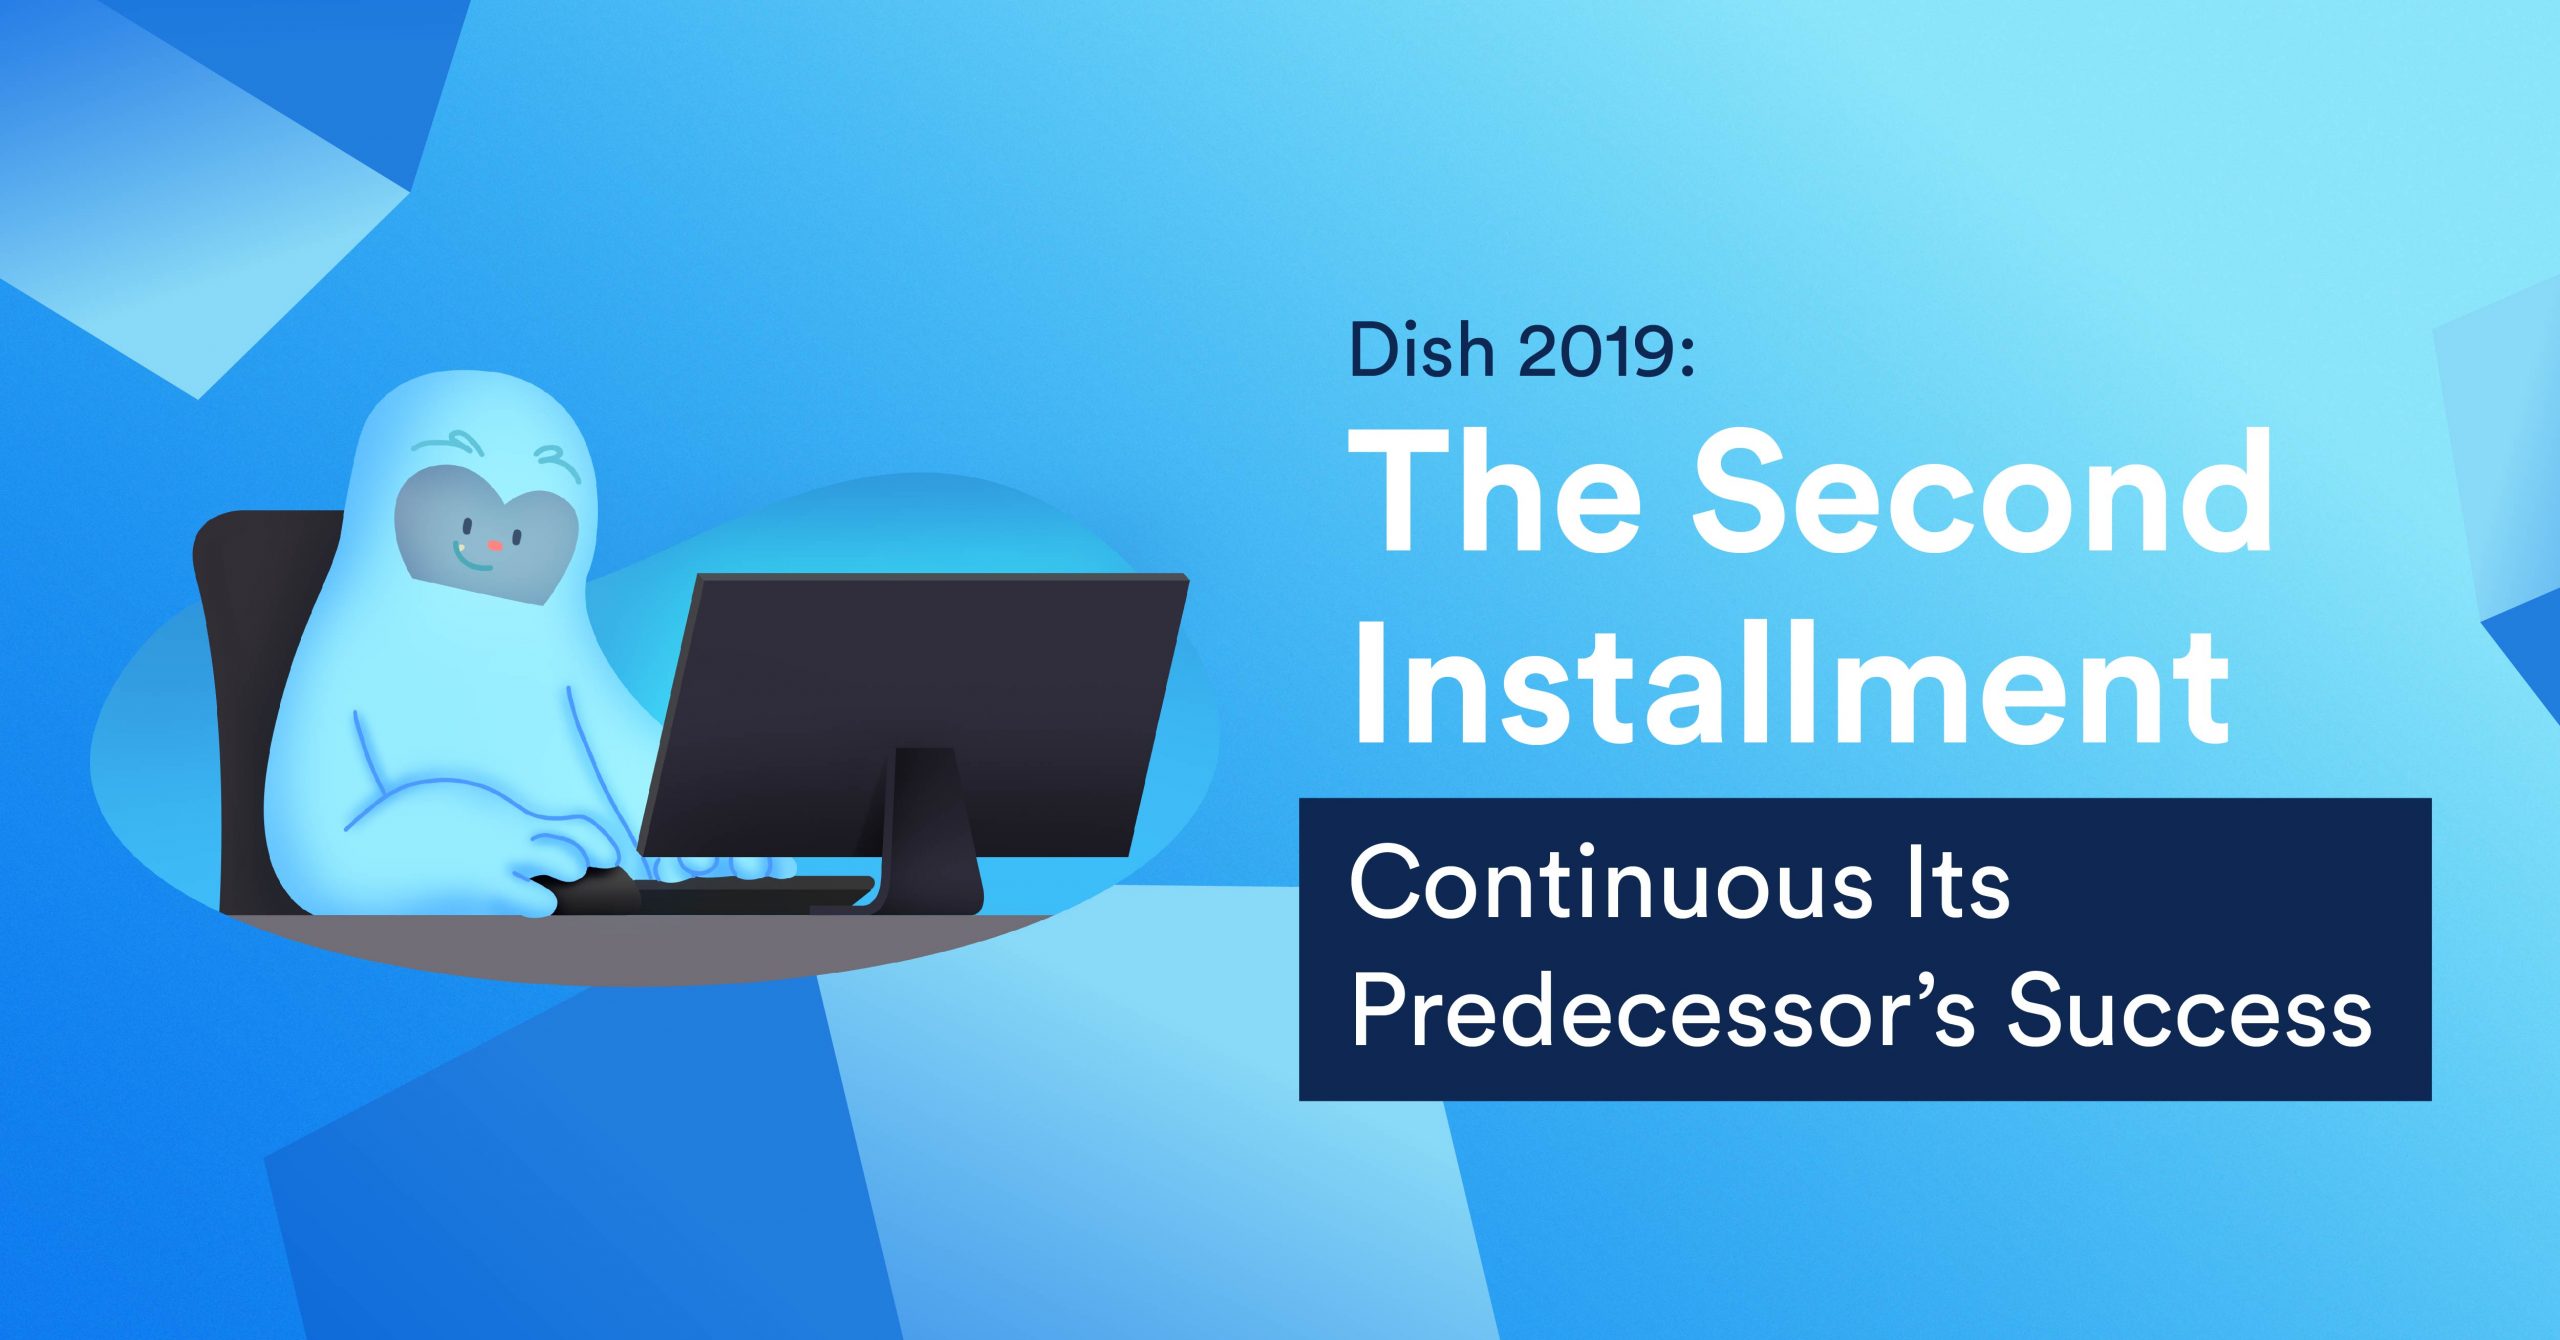 Dish 2019: The Second Installment Continuous Its Predecessor’s Success